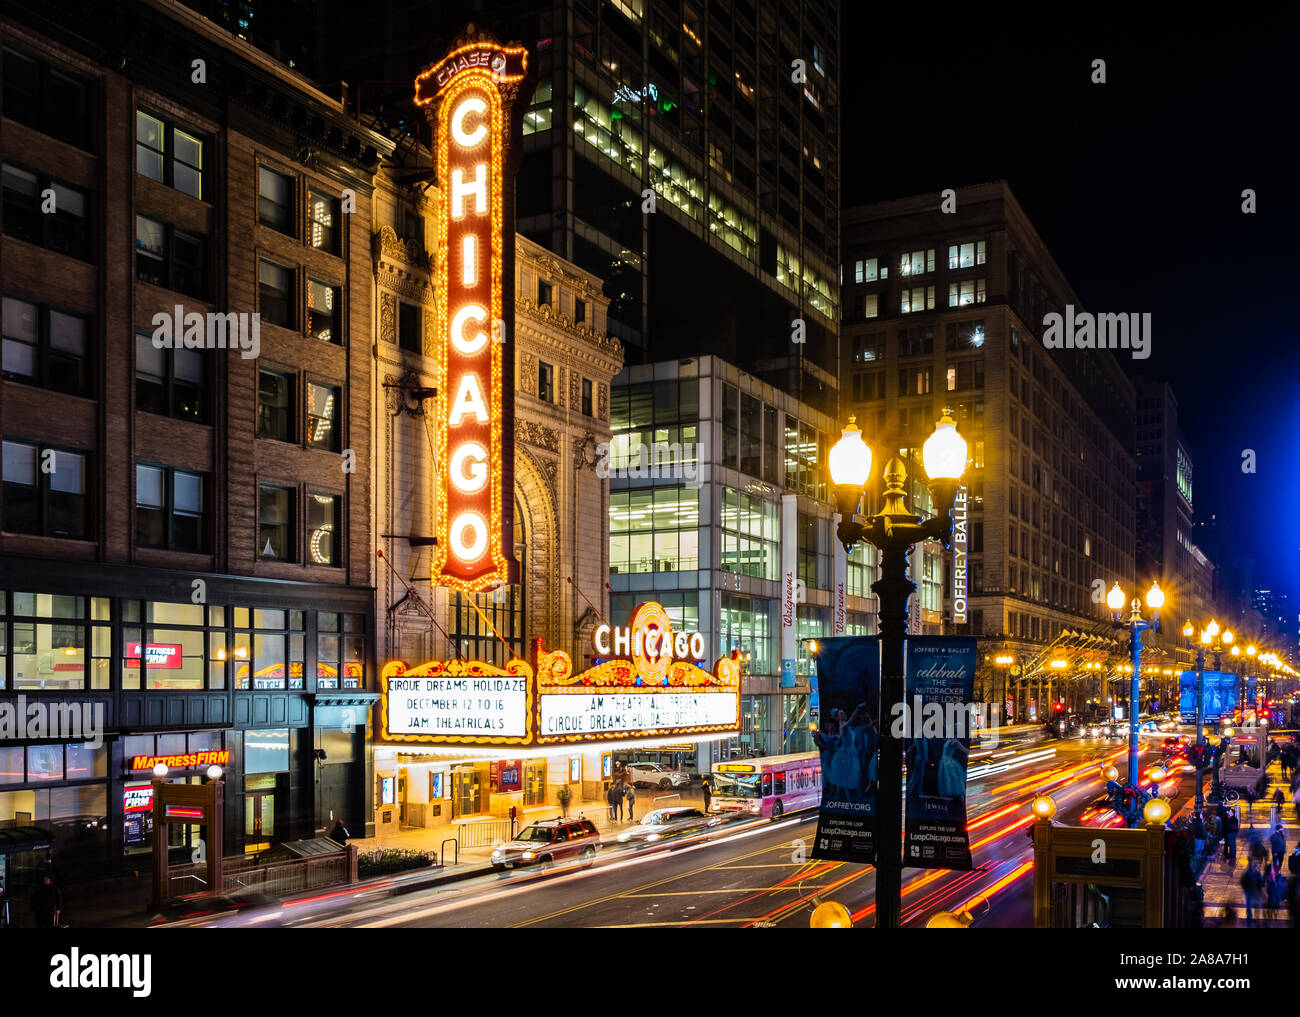 The Chicago Theater at night - world famous landmark Stock Photo